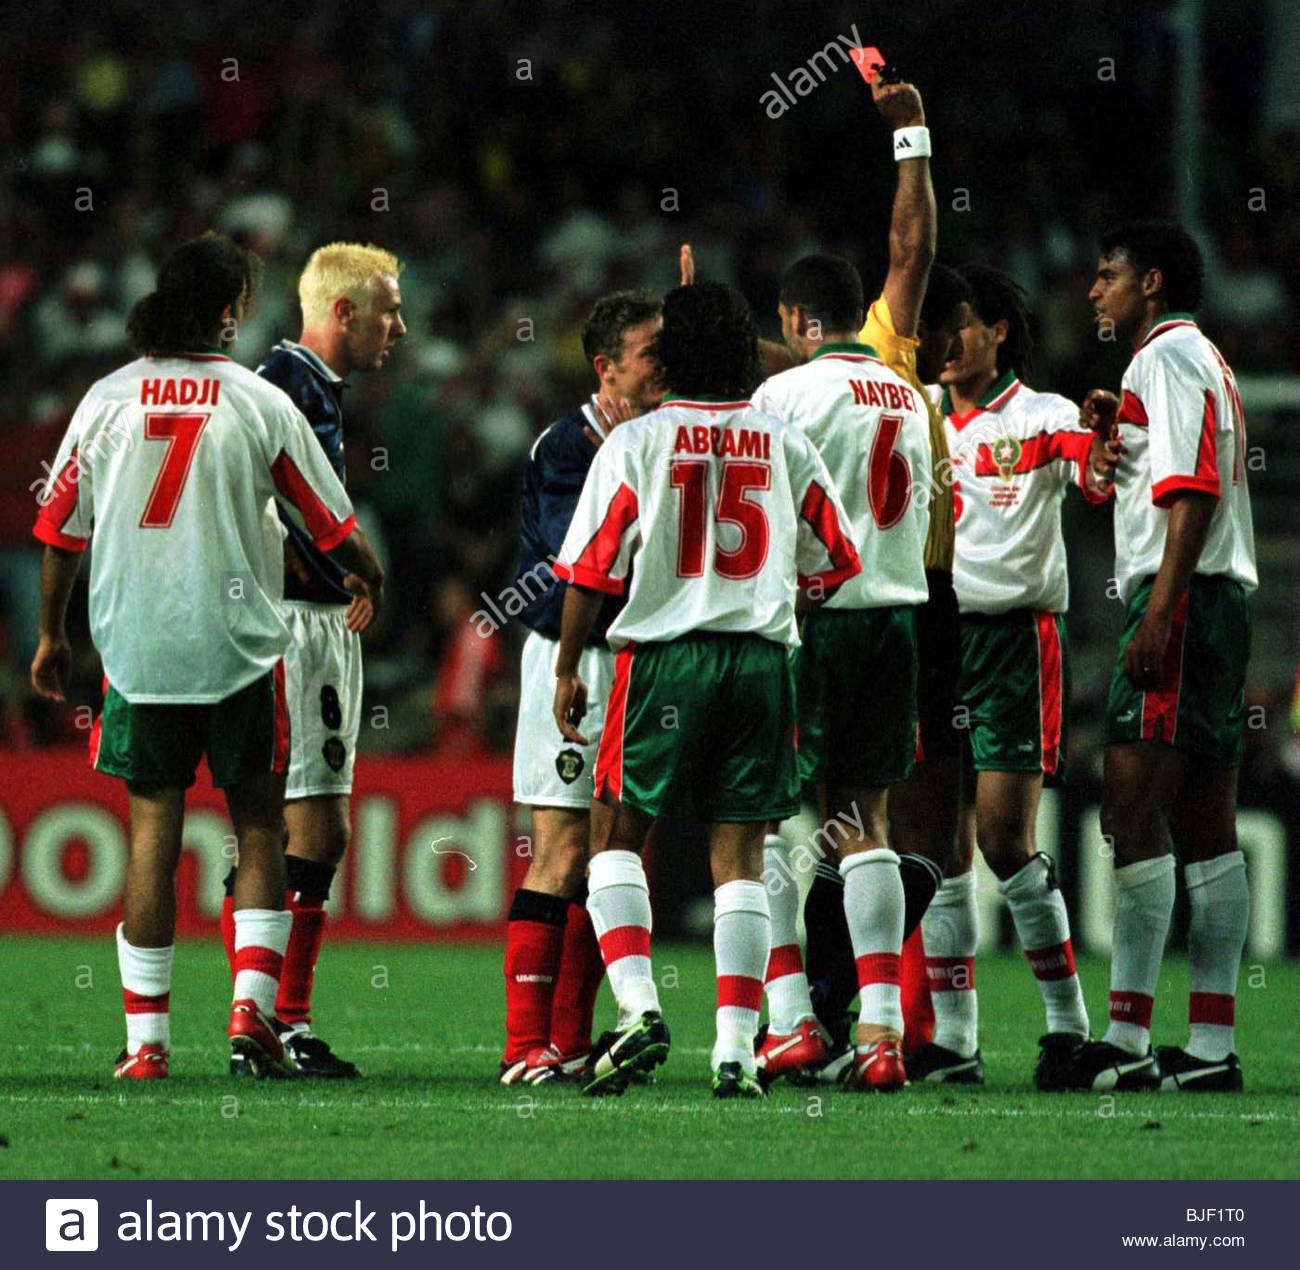 230698-fifa-world-cup-1998-morocco-v-scotland-3-0-stade-geofrroy-guichard-BJF1T0.jpg